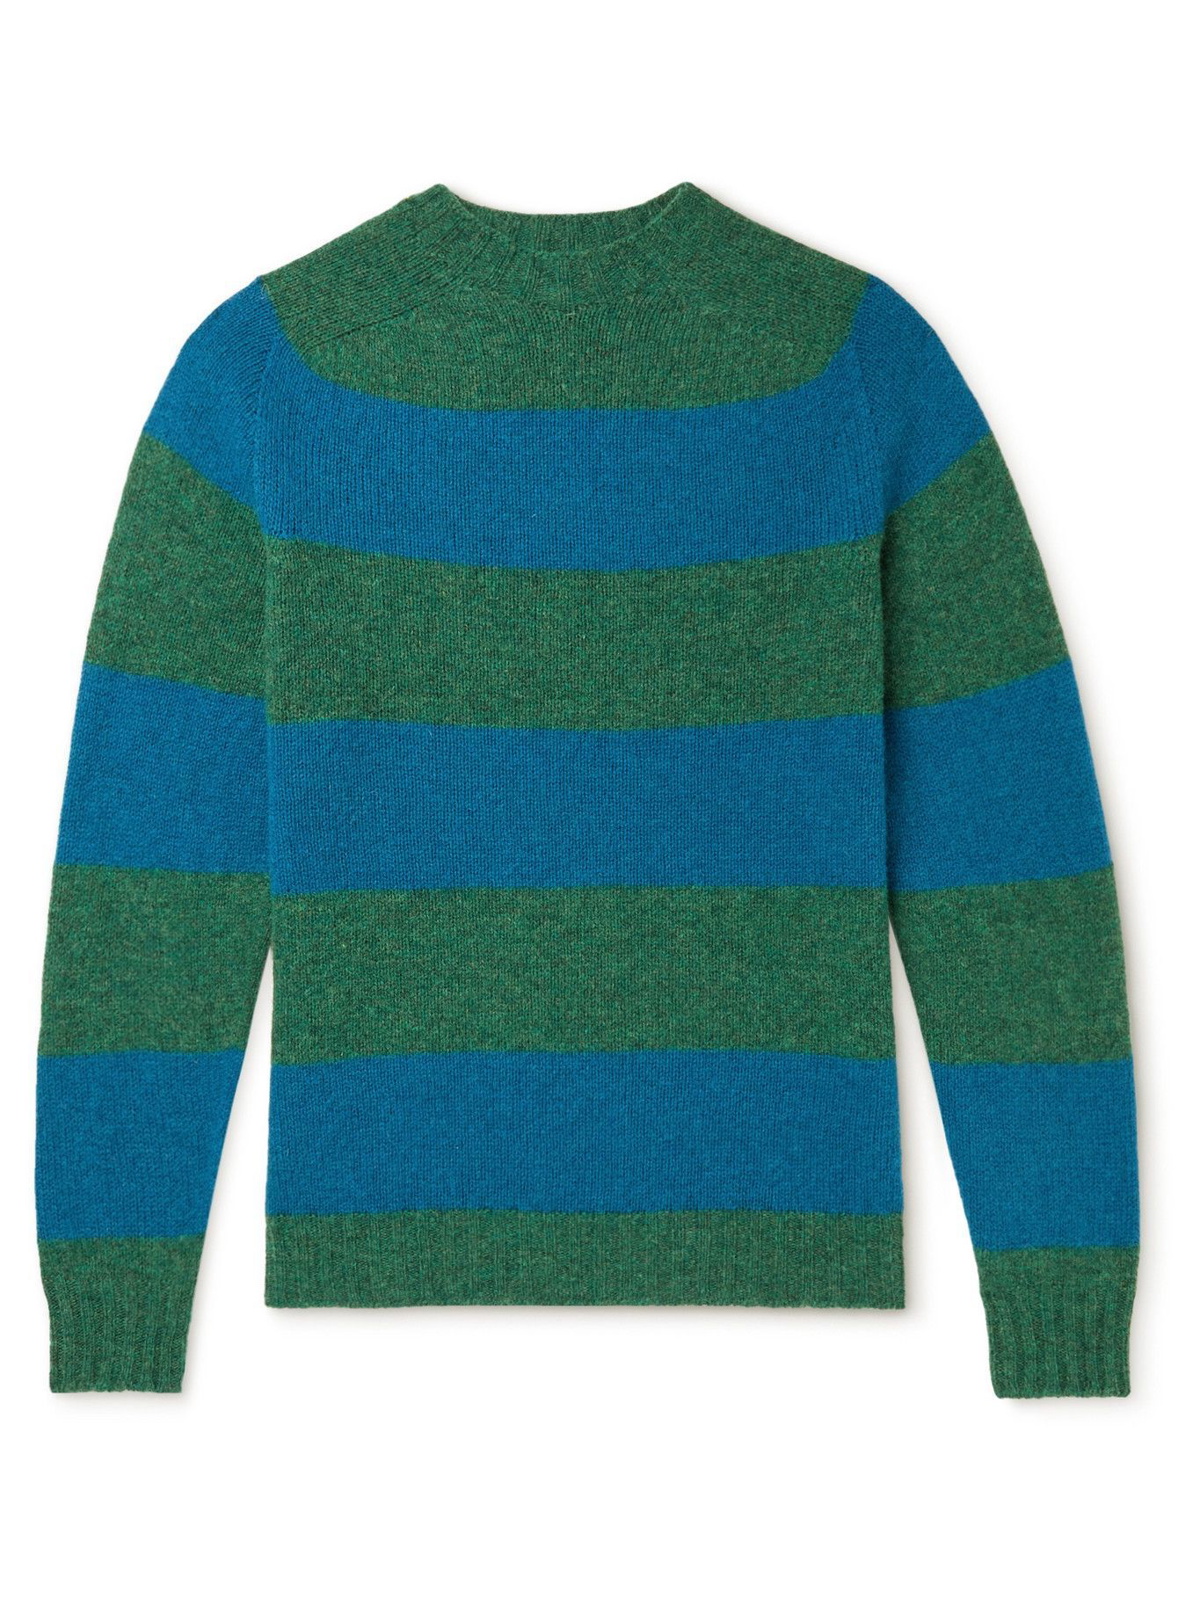 AIMÉ LEON DORE - Drake's Striped Wool Sweater - Green